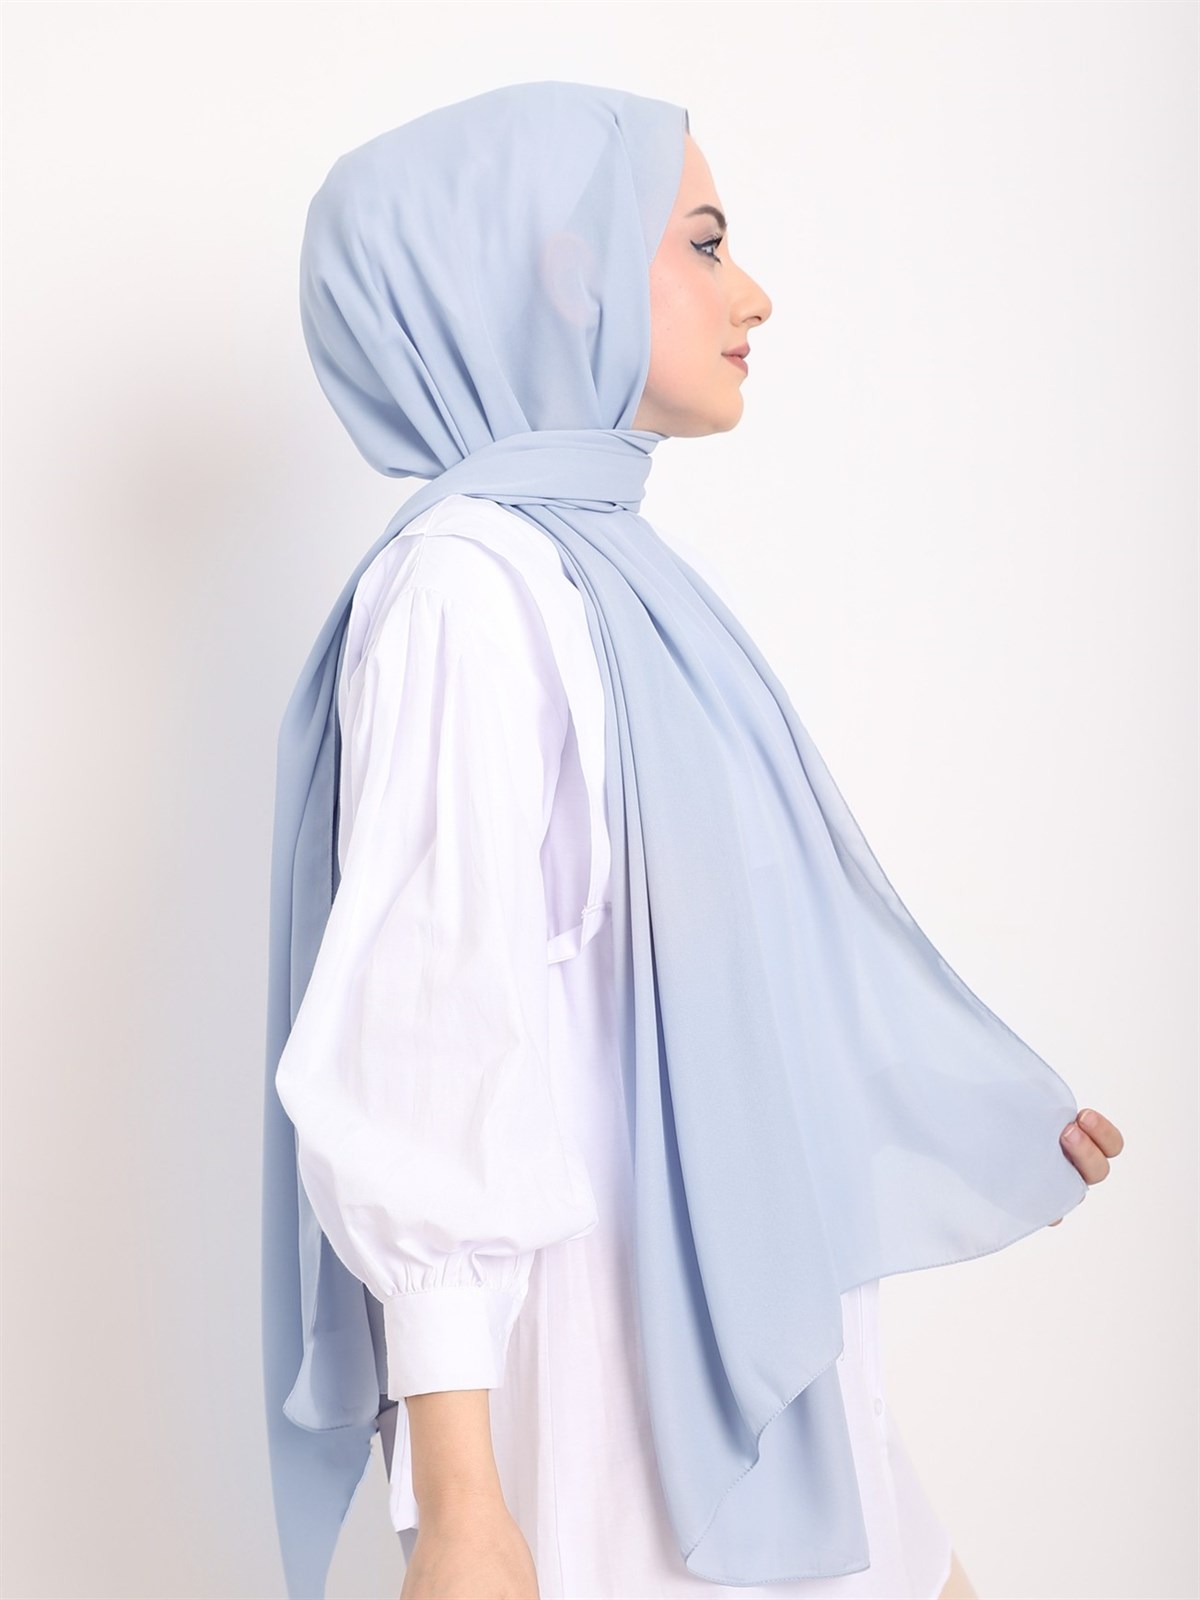 funky hijab styles